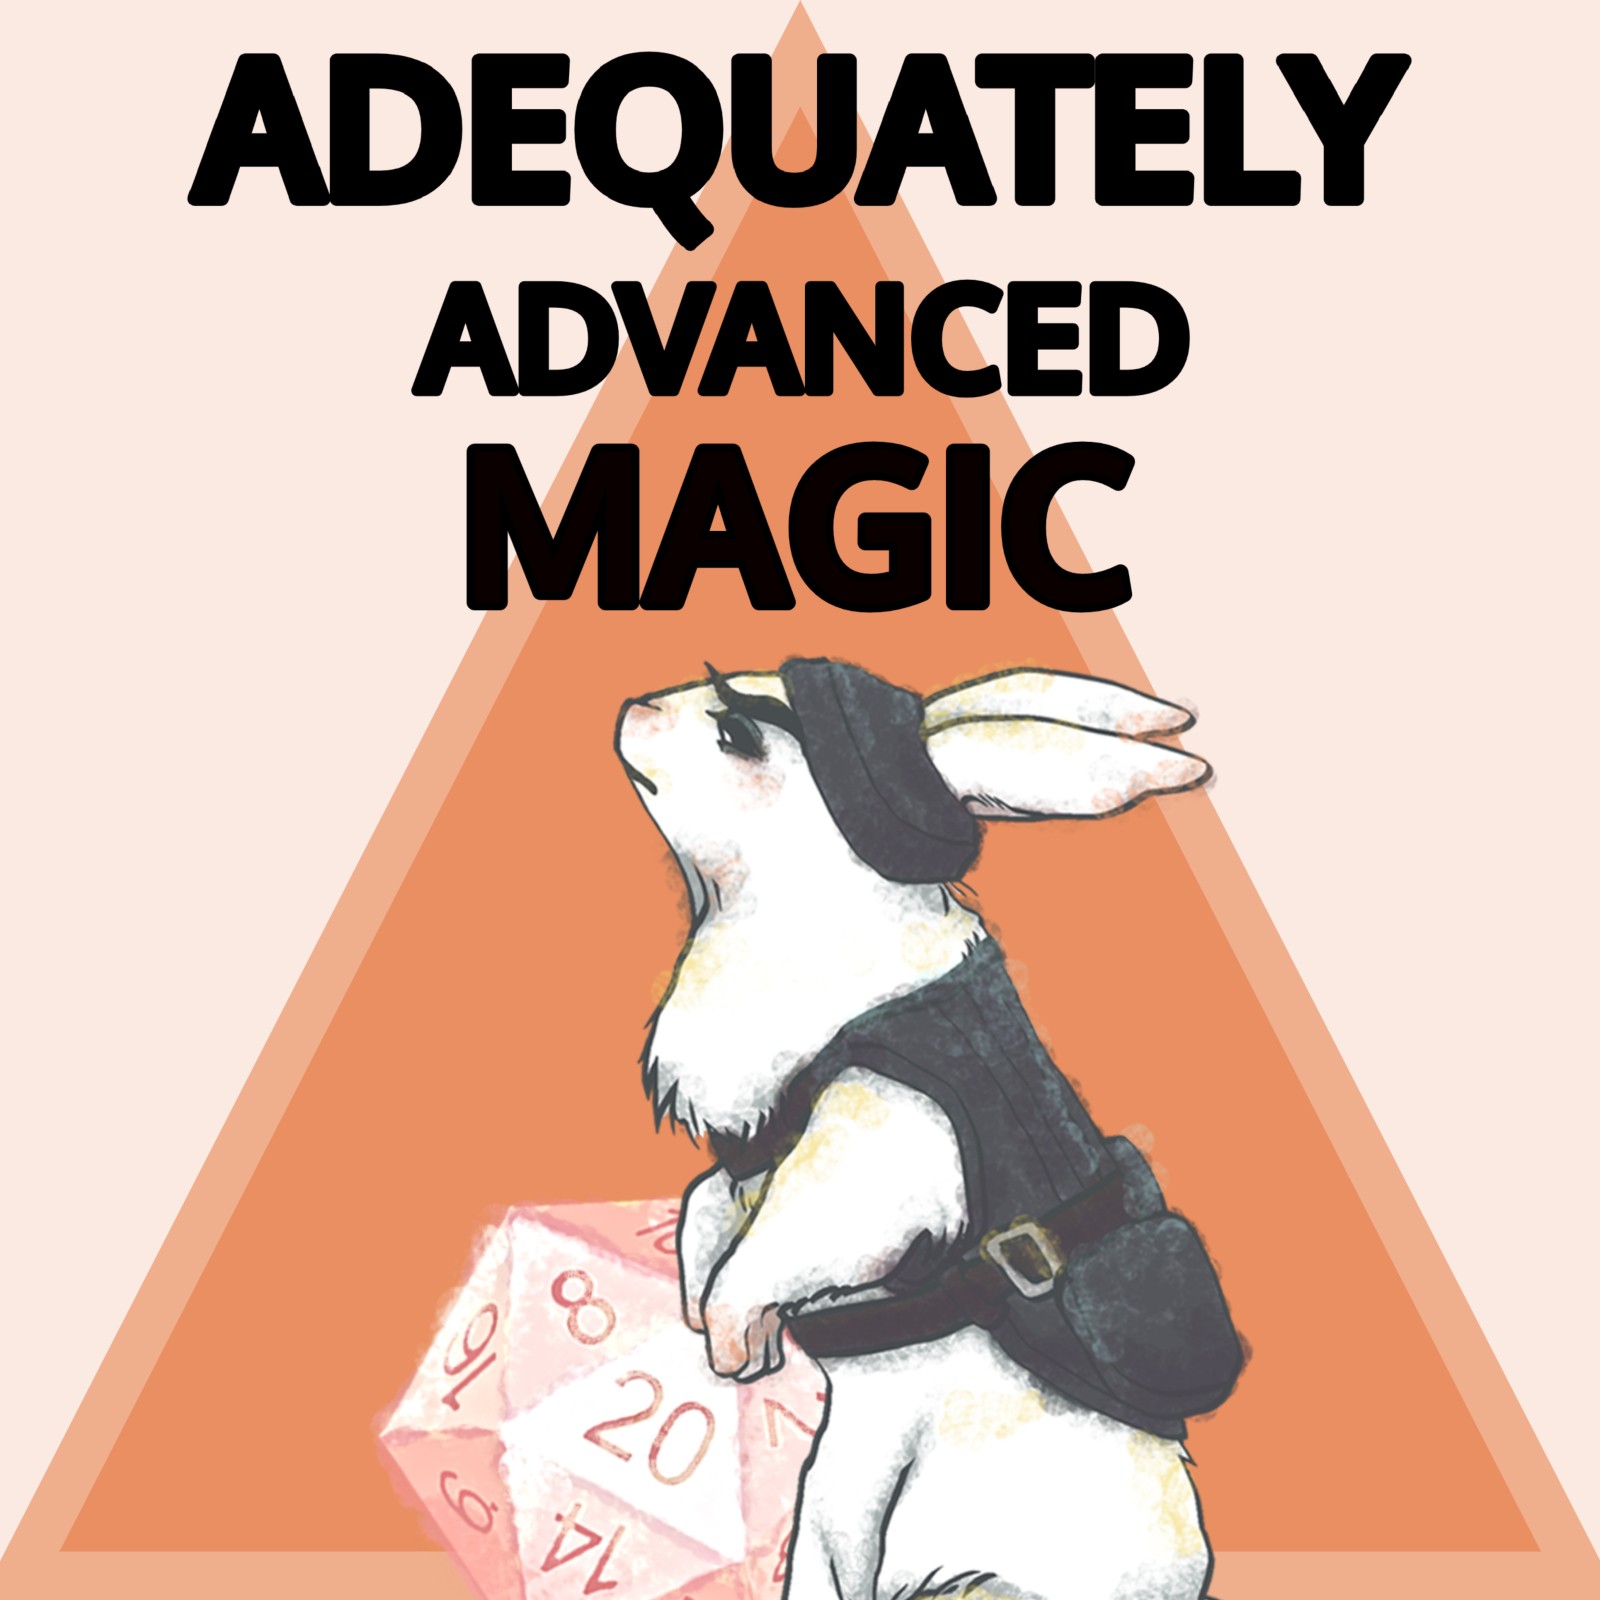 Trailer for Adequately Advanced Magic